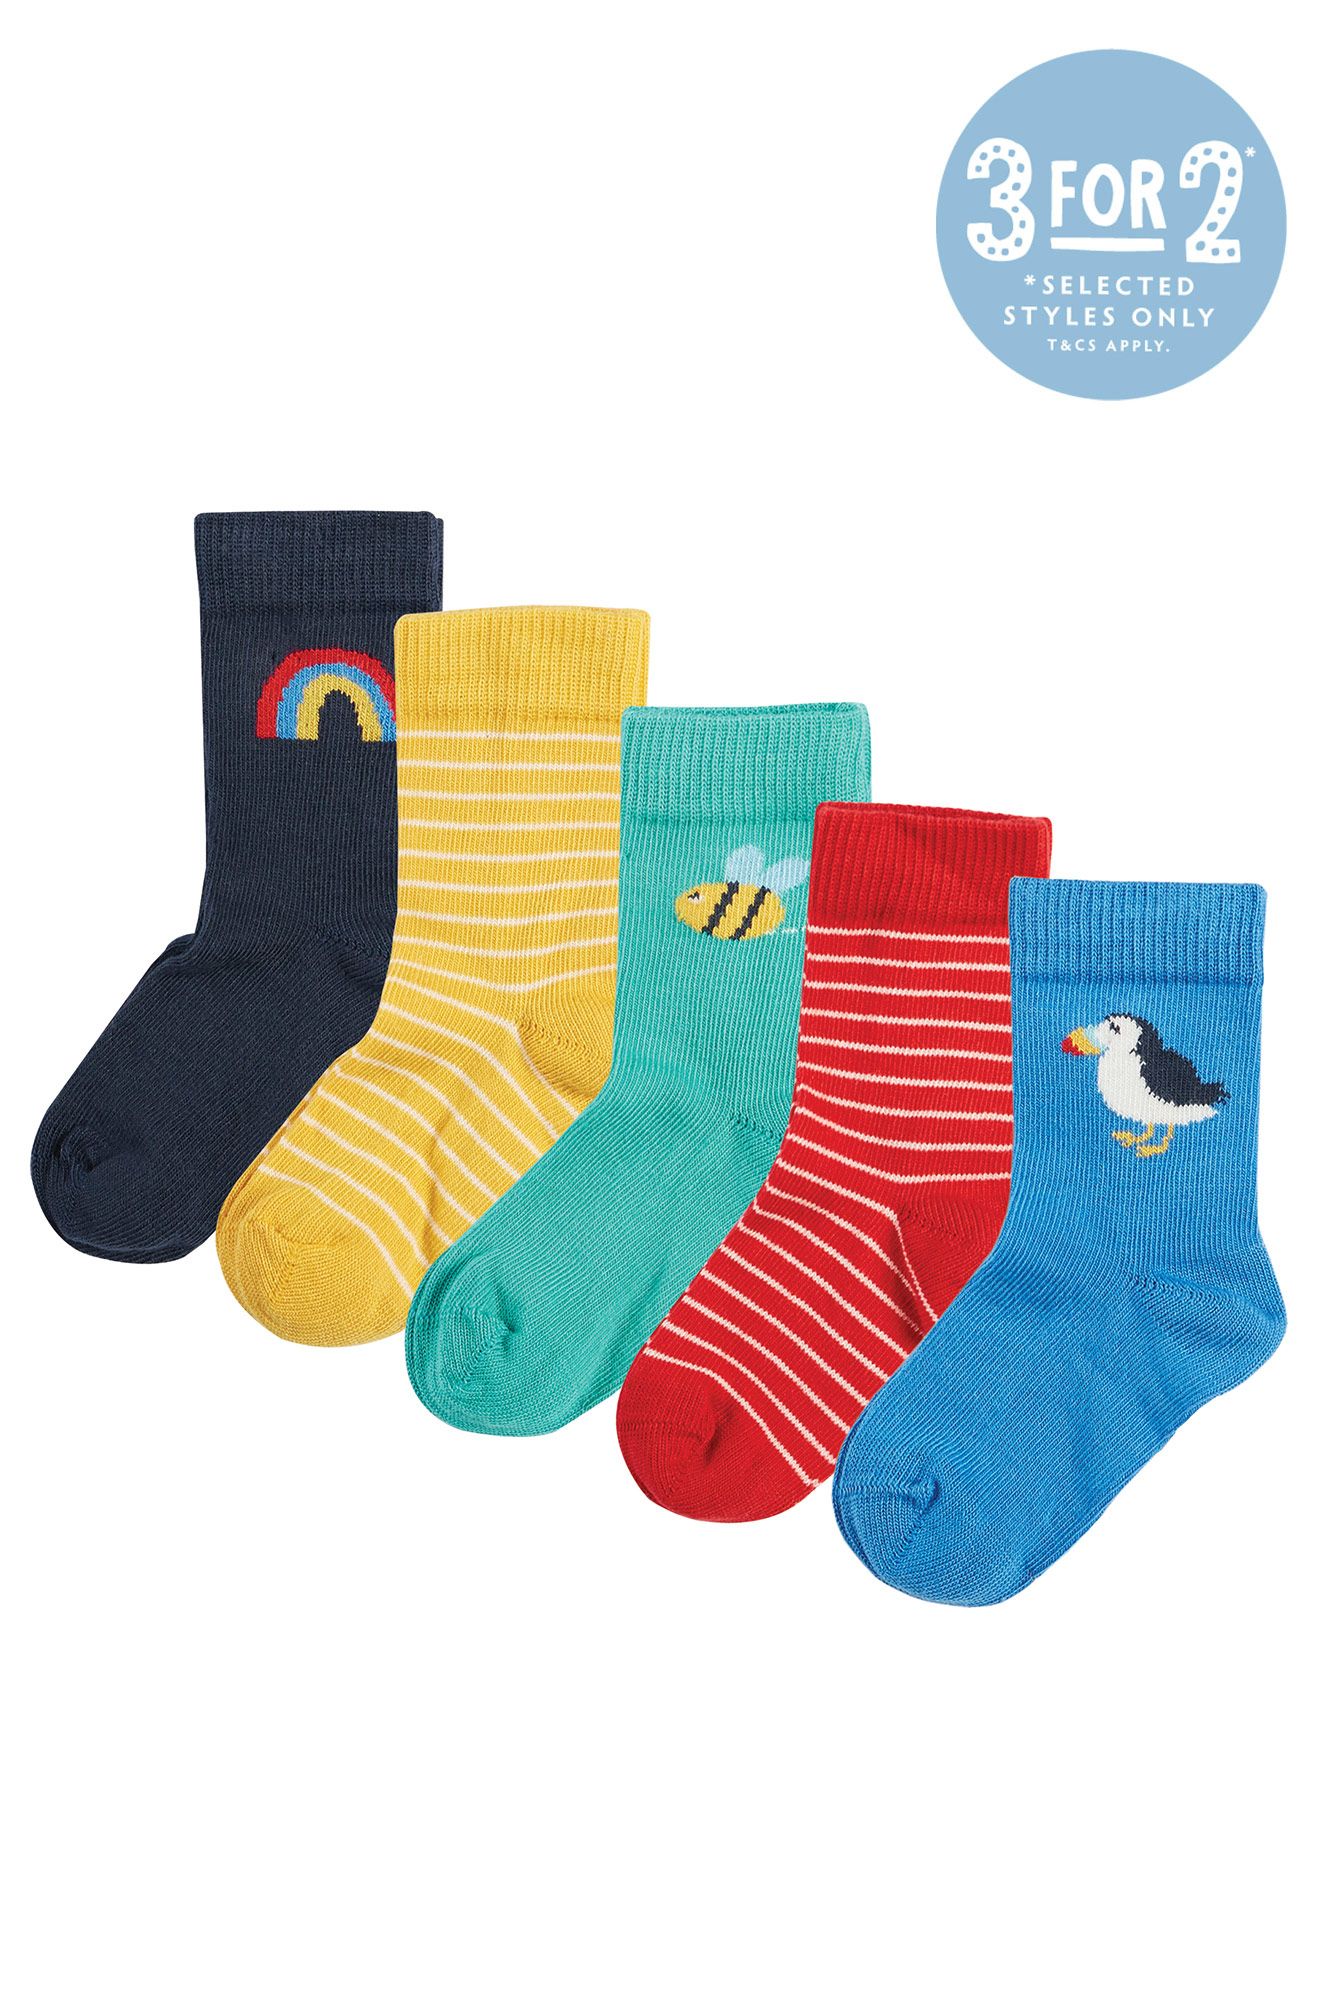 Finlay Socks 5 Pack